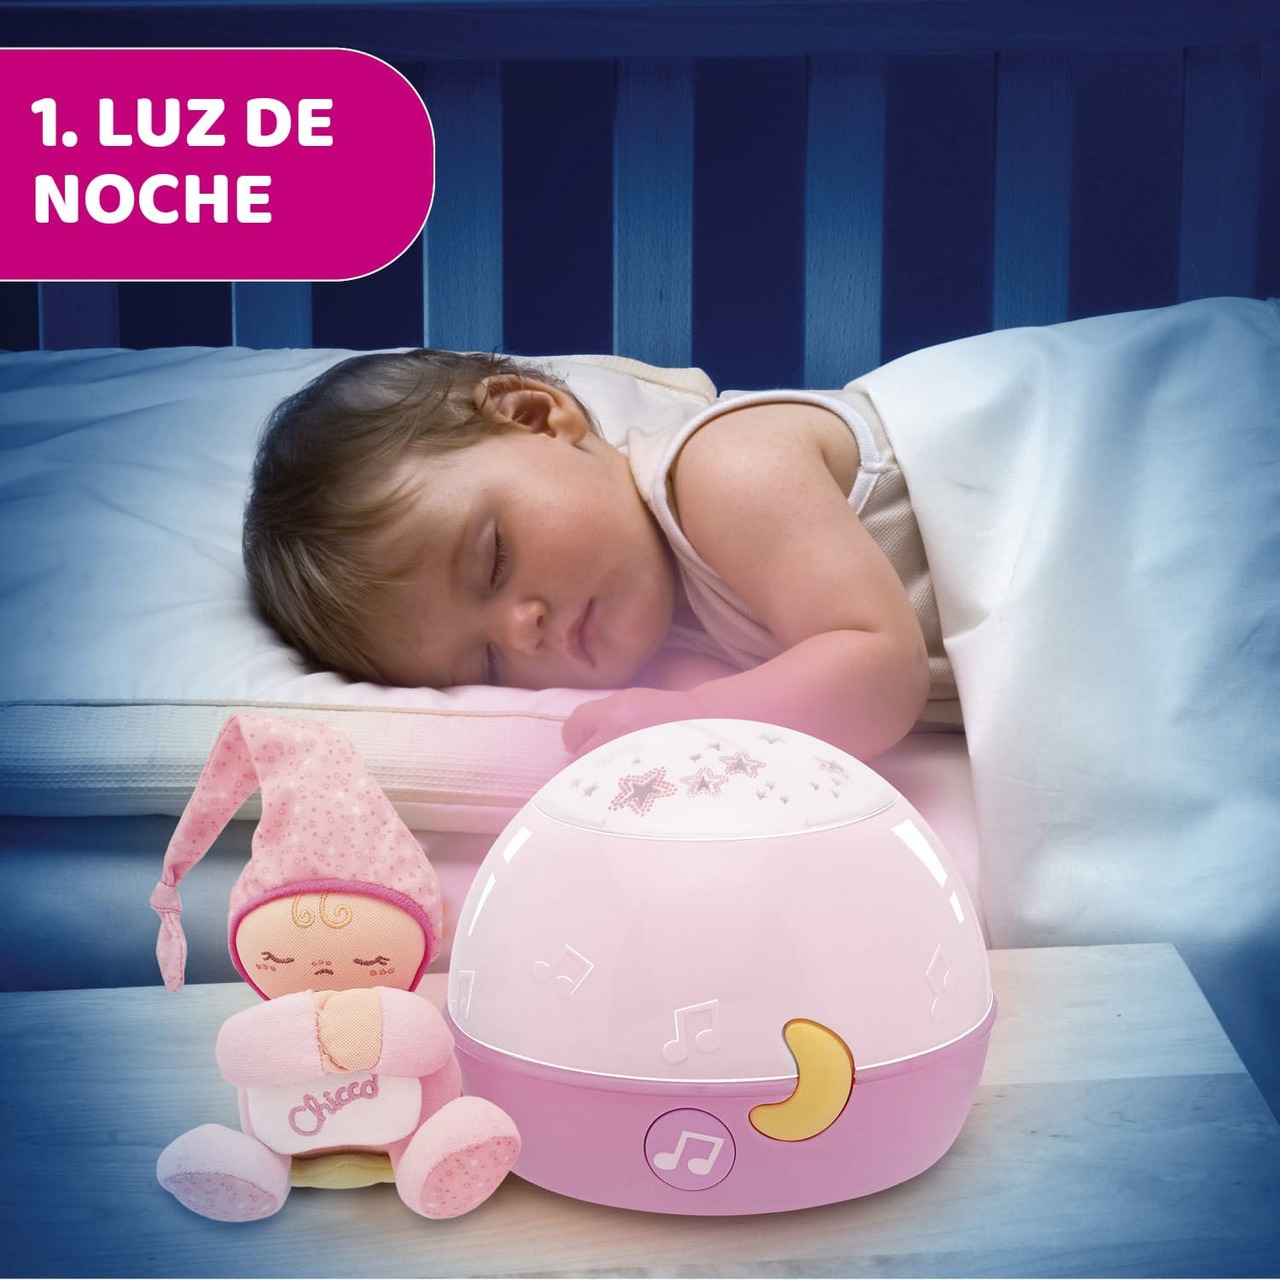 Luz noche bebé nube durmiente - A Little Lovely Company - Tu Bebebox